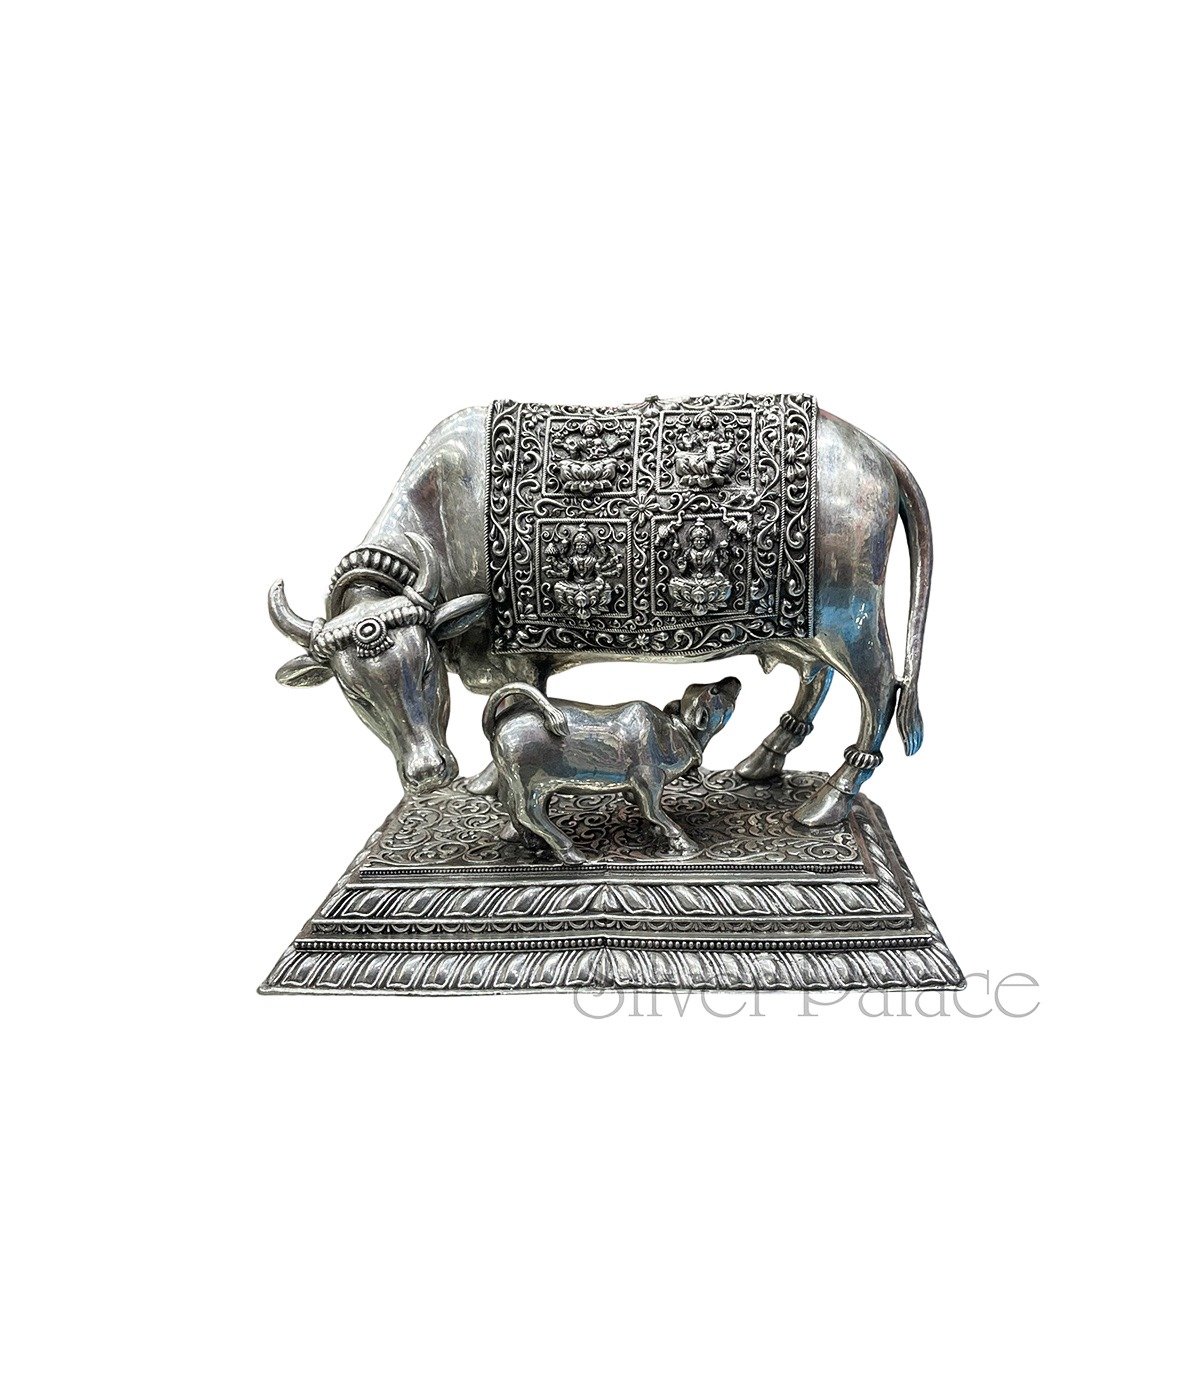 92.5 Oxidised Silver Kamadhenu Cow Statue - Silver Palace